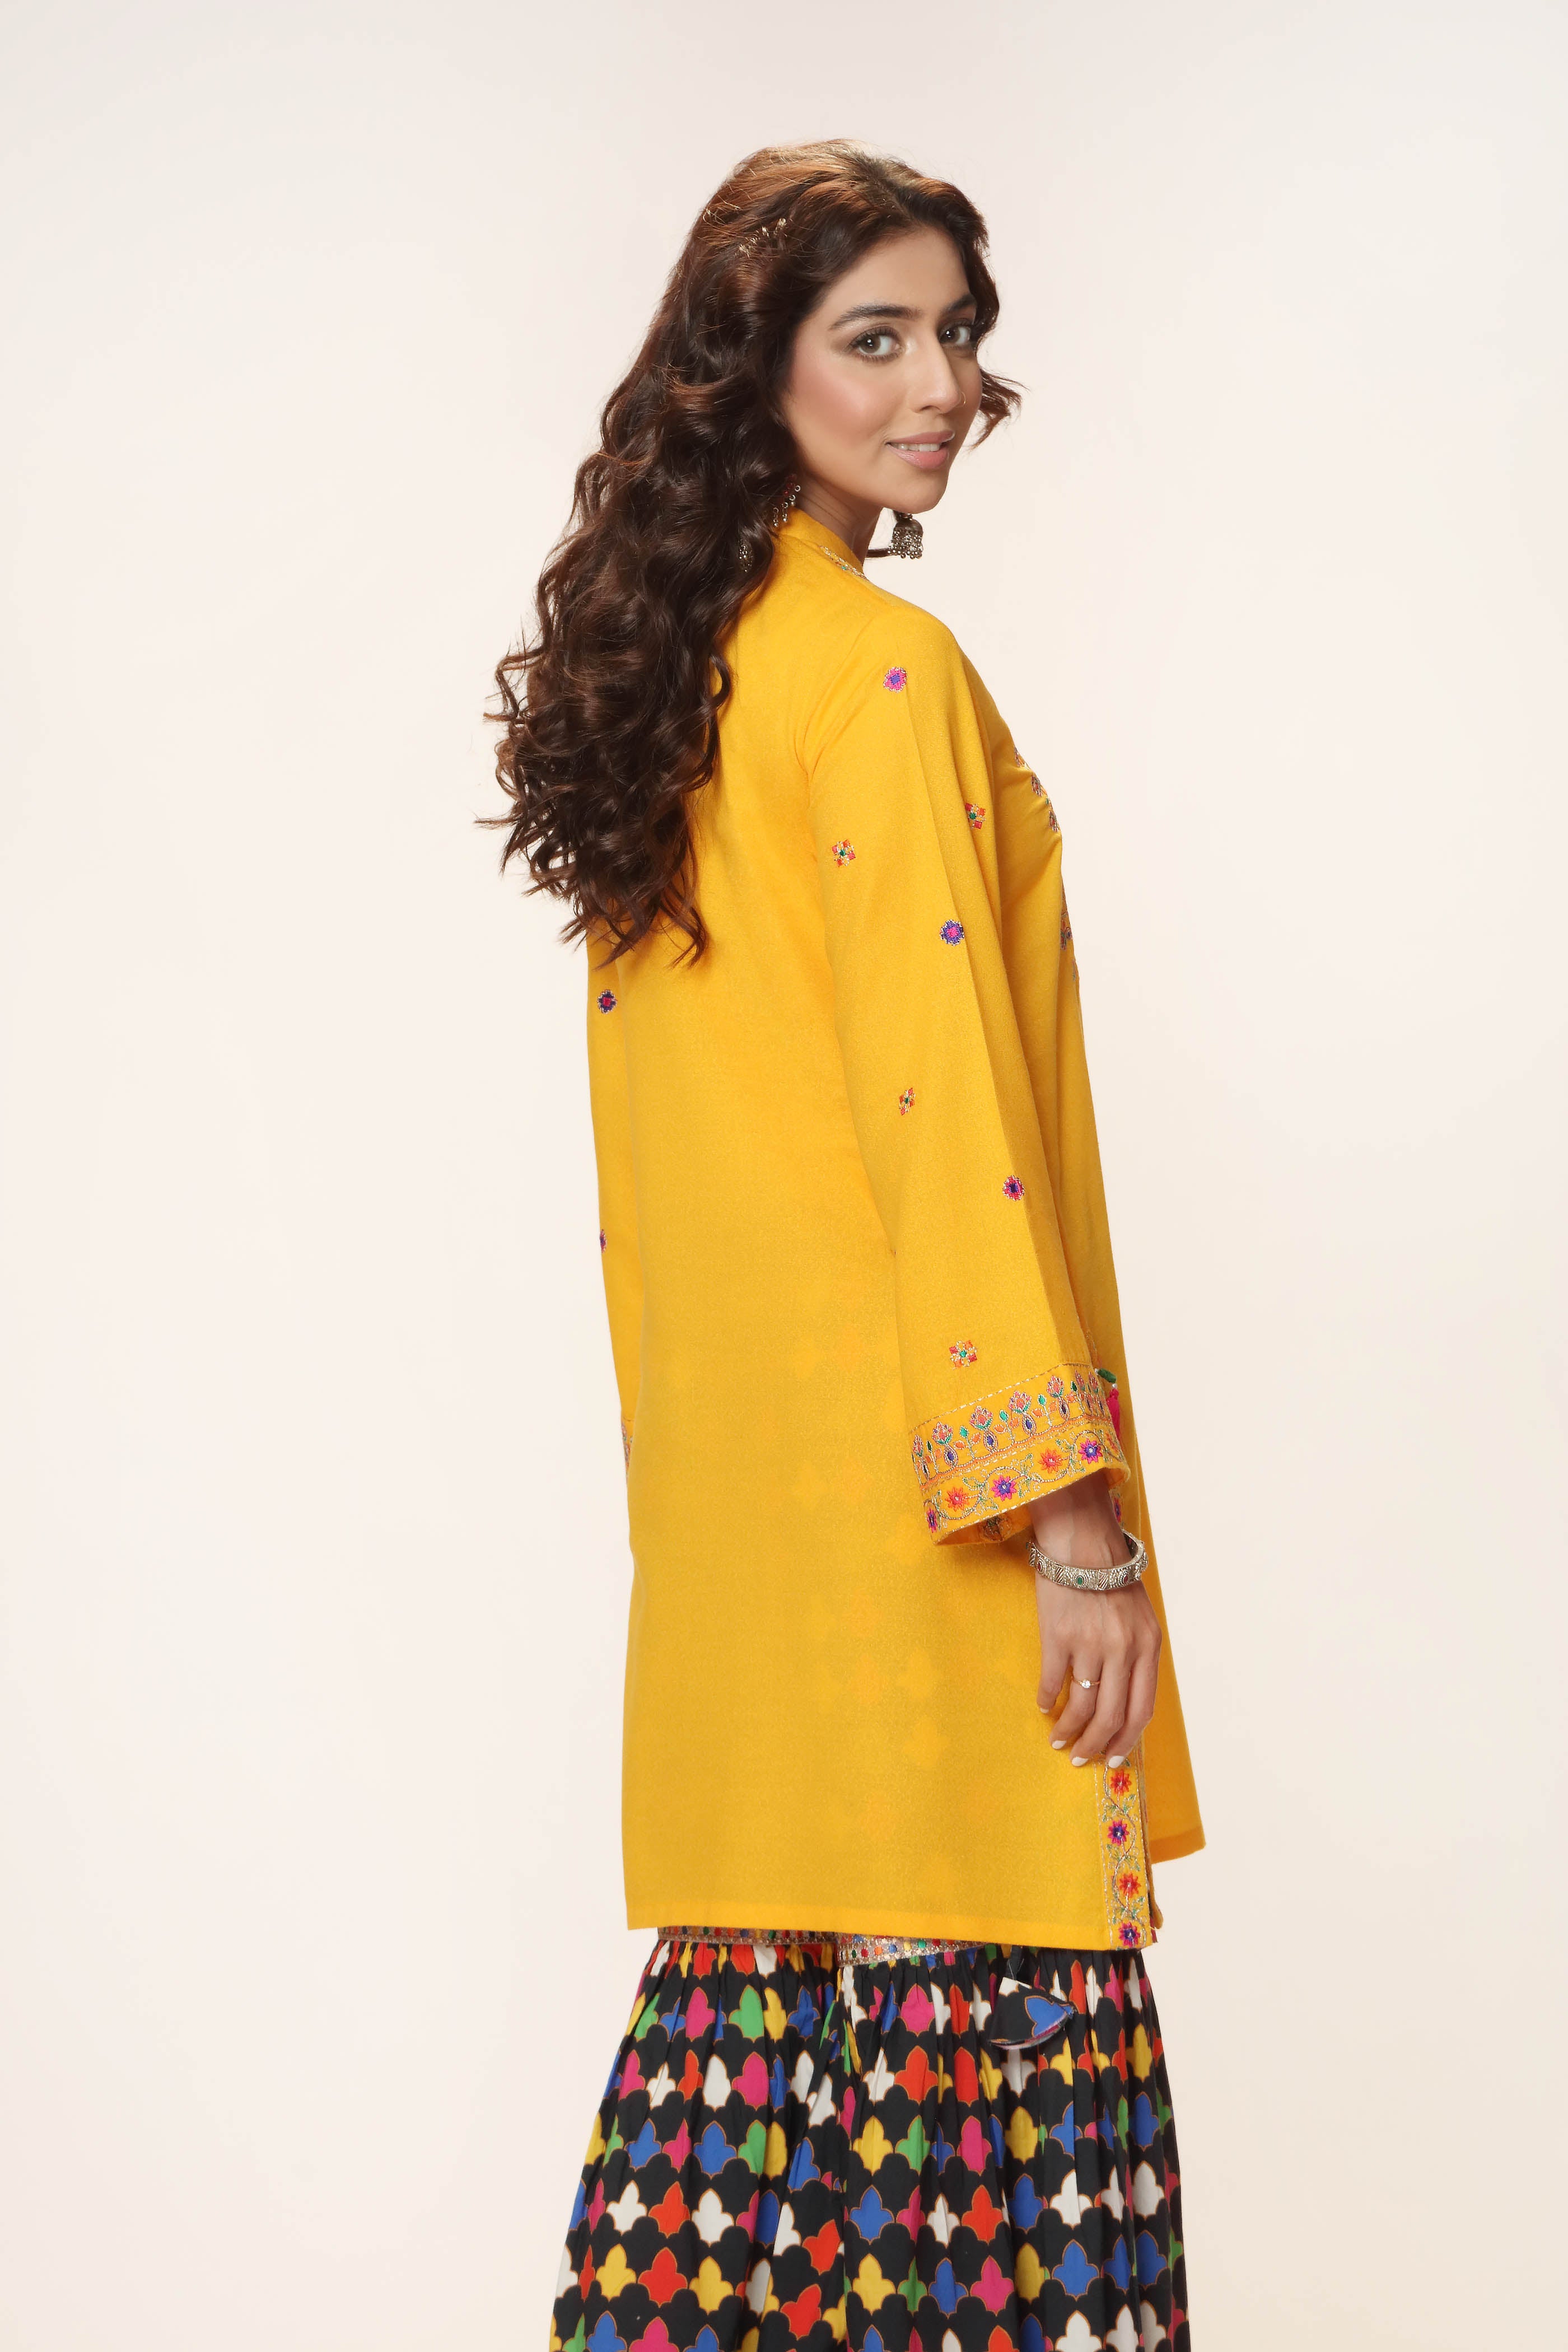 Tilla Embroidery 1 in Yellow coloured Lawn Karandi fabric 3